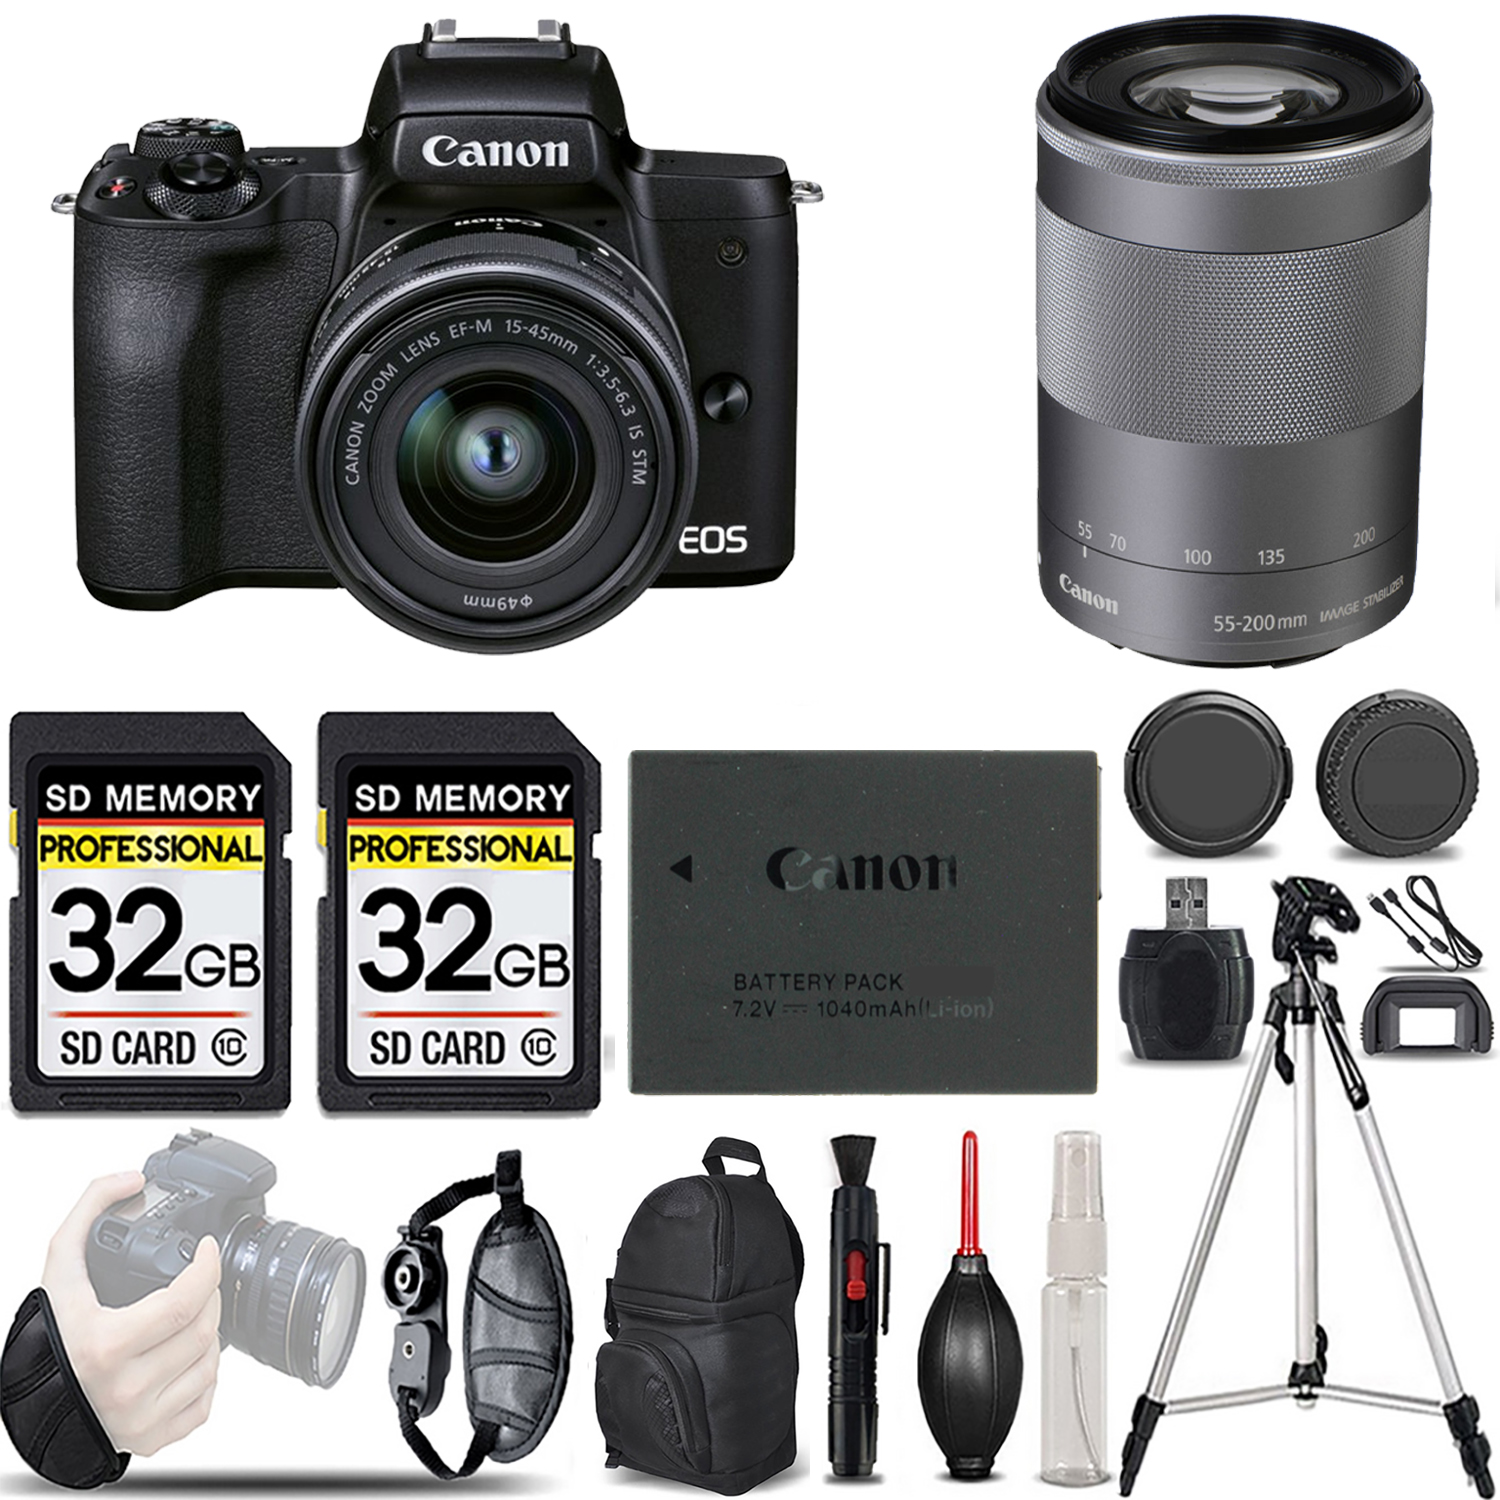 M50 II + 15-45mm Lens (Black) + 55-200mm IS Lens (Silver) - LOADED KIT *FREE SHIPPING*